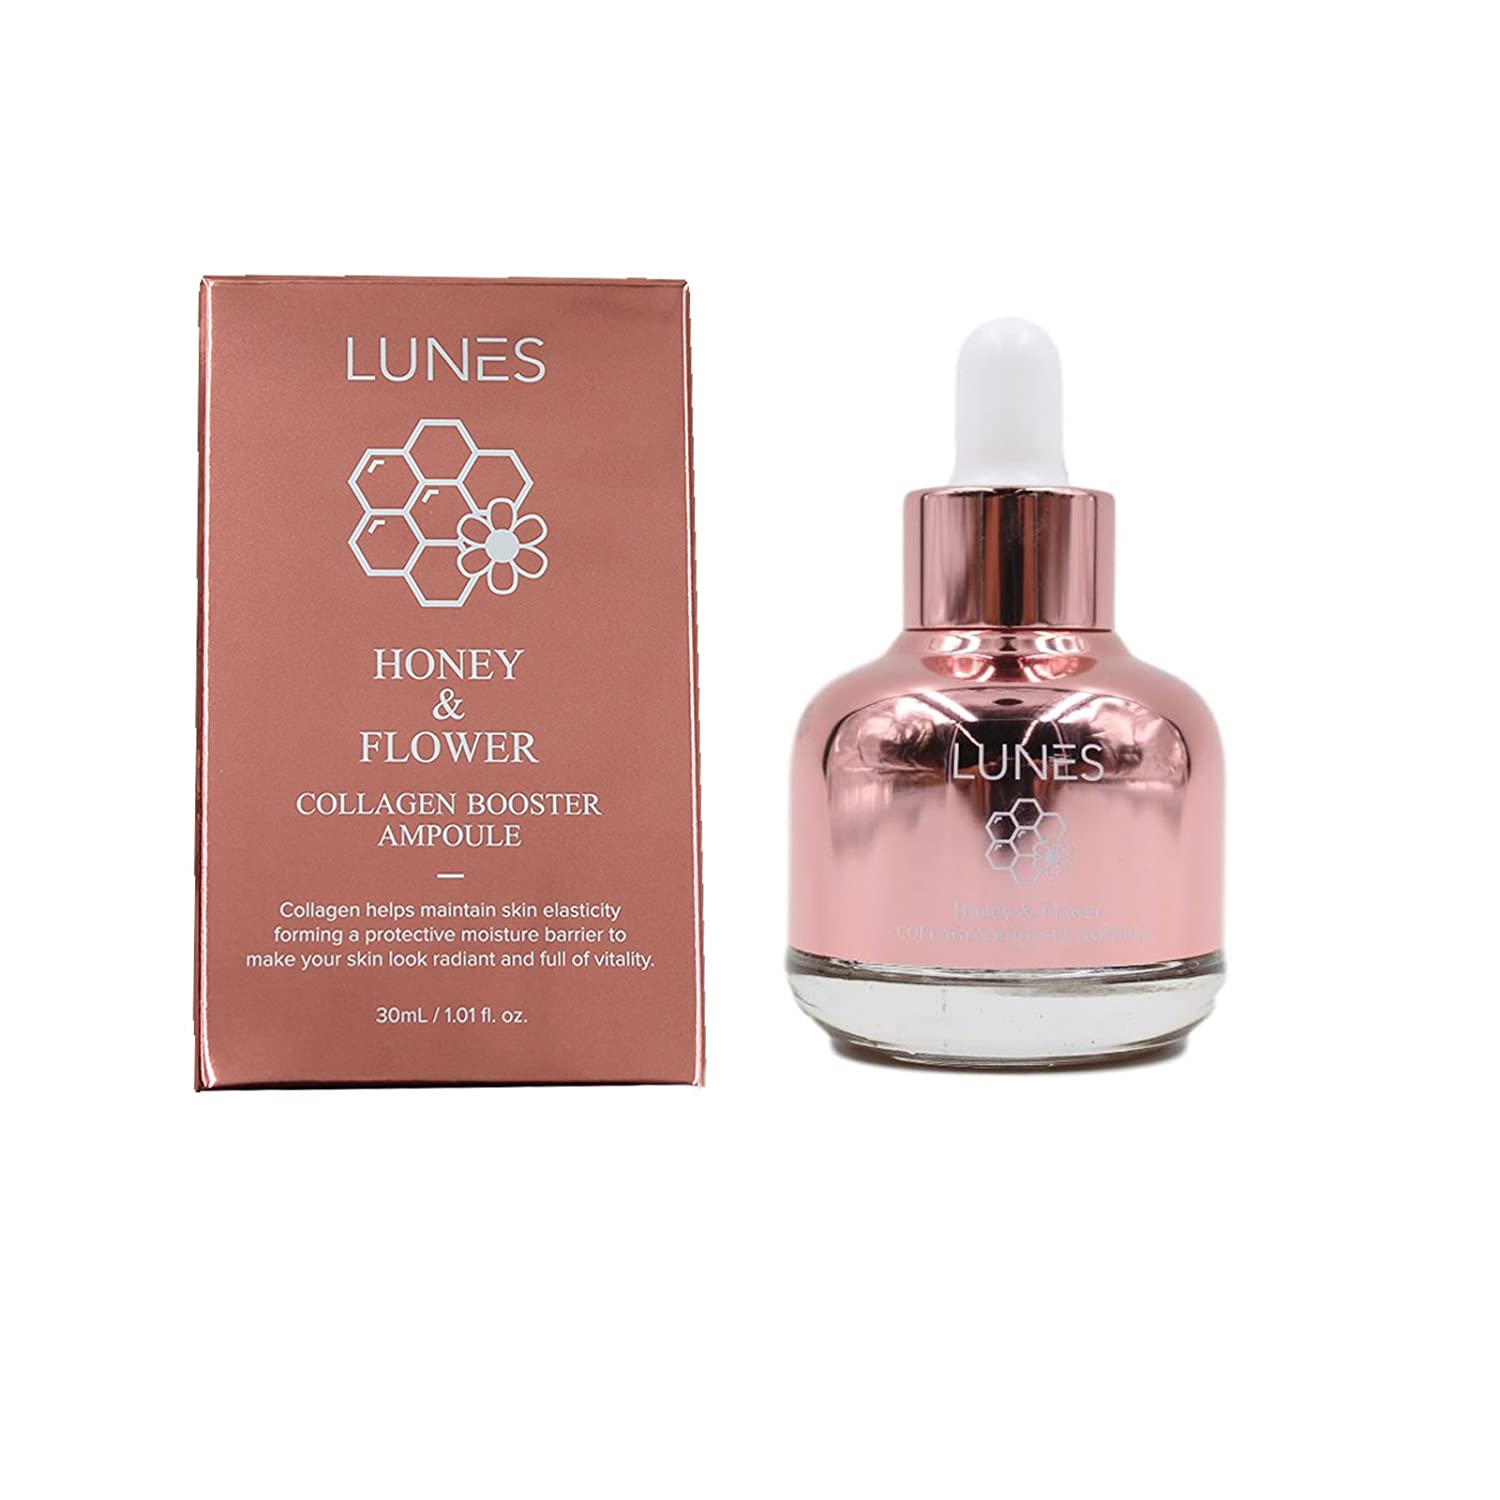 LUNES HONEY & FLOWER Collagen Booster Ampule